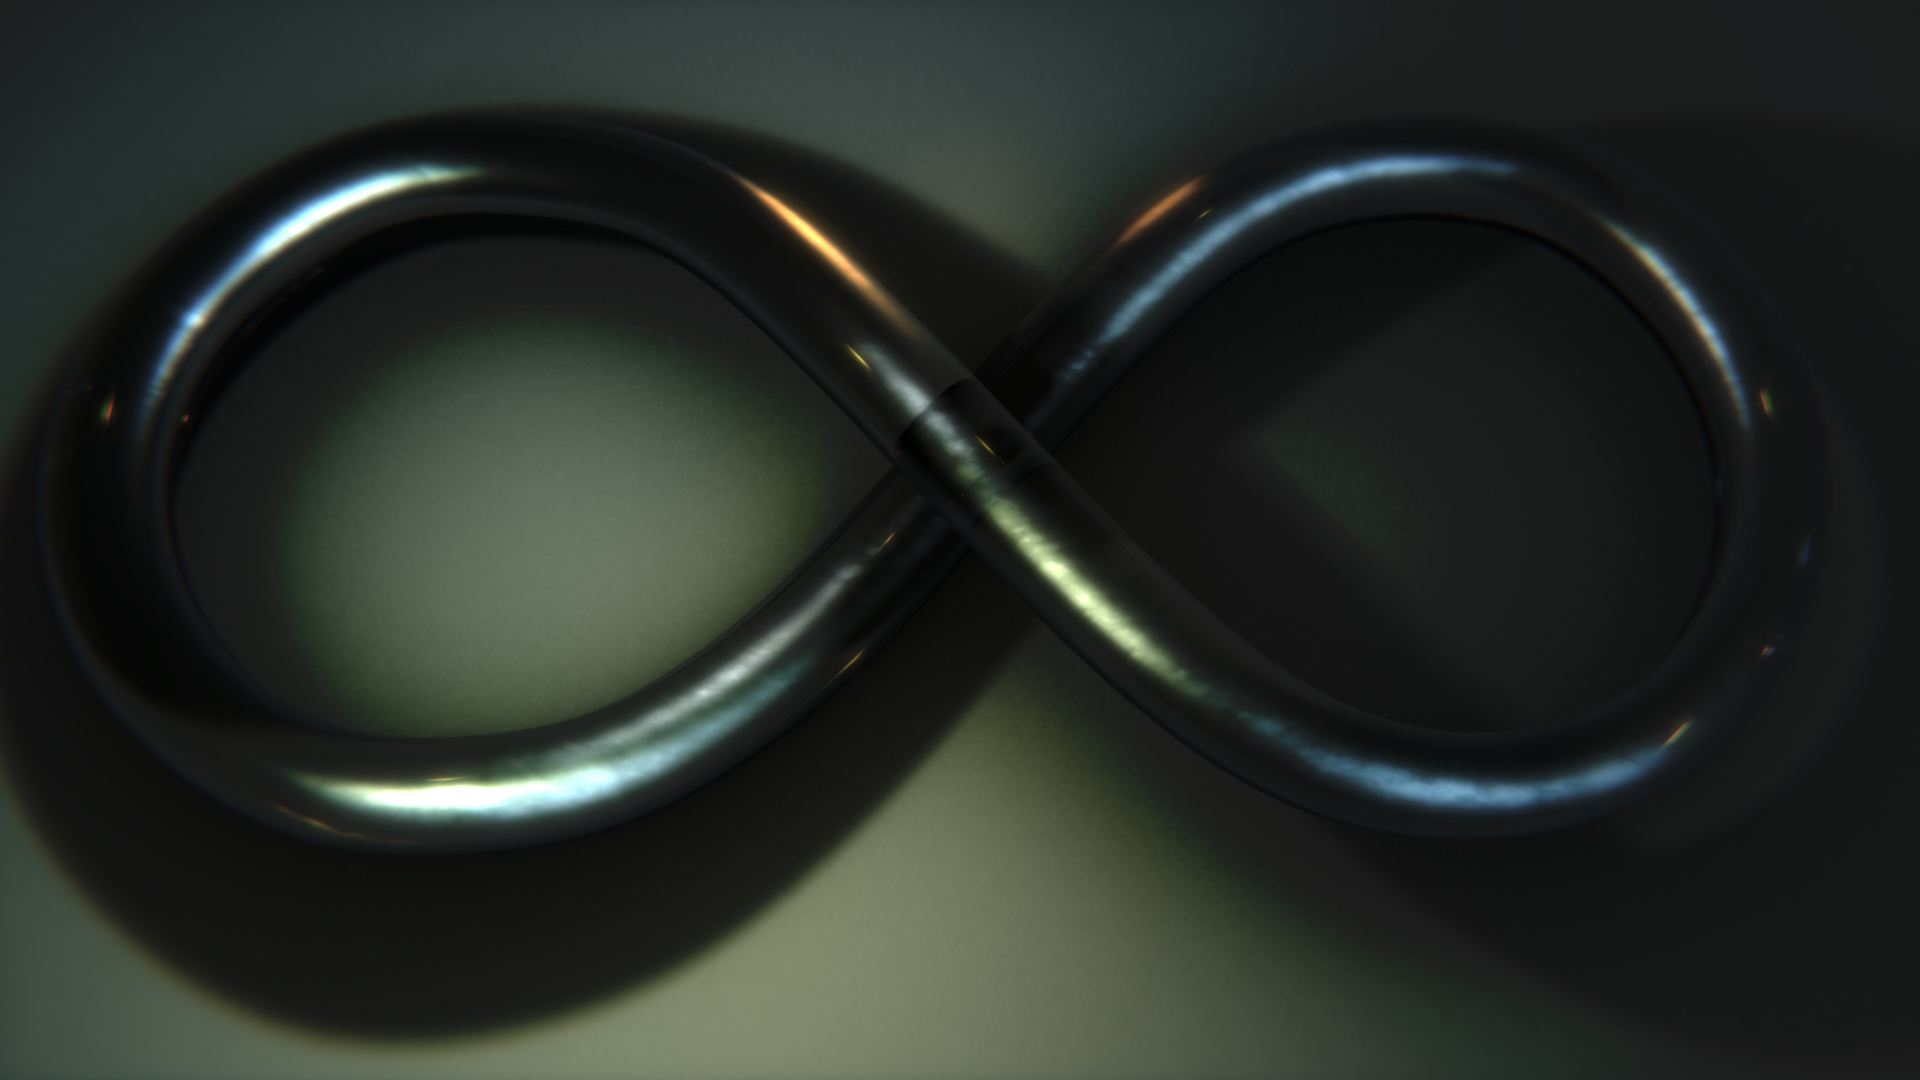 infinity symbol by JoaoYates